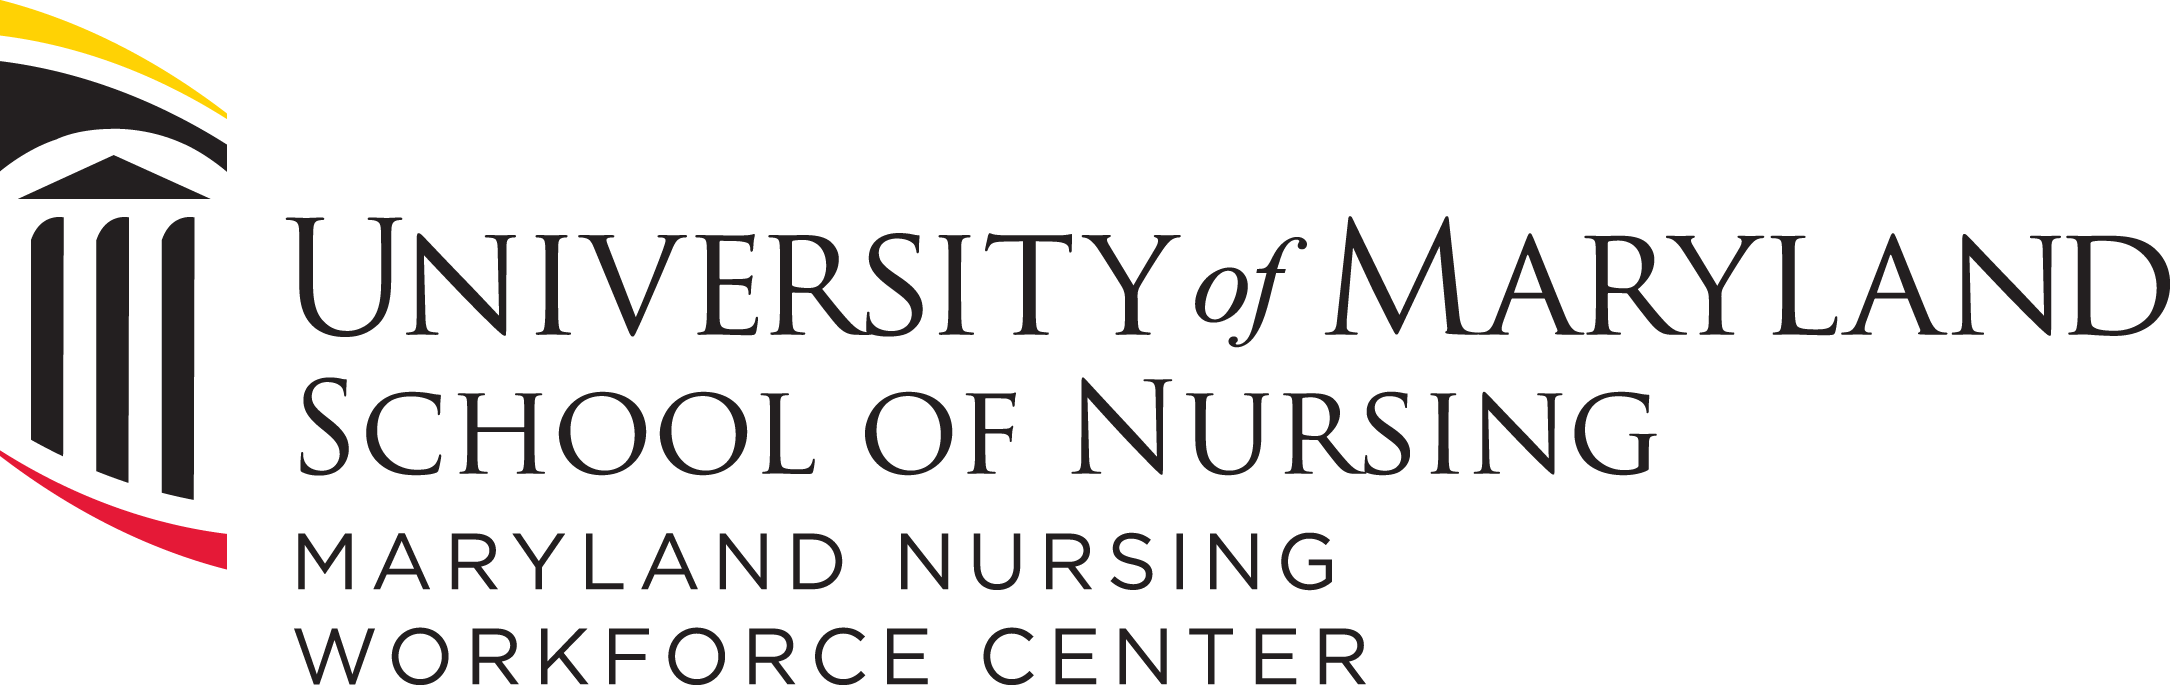 The University of Maryland School of Nursing, Maryland Nursing Workforce Center